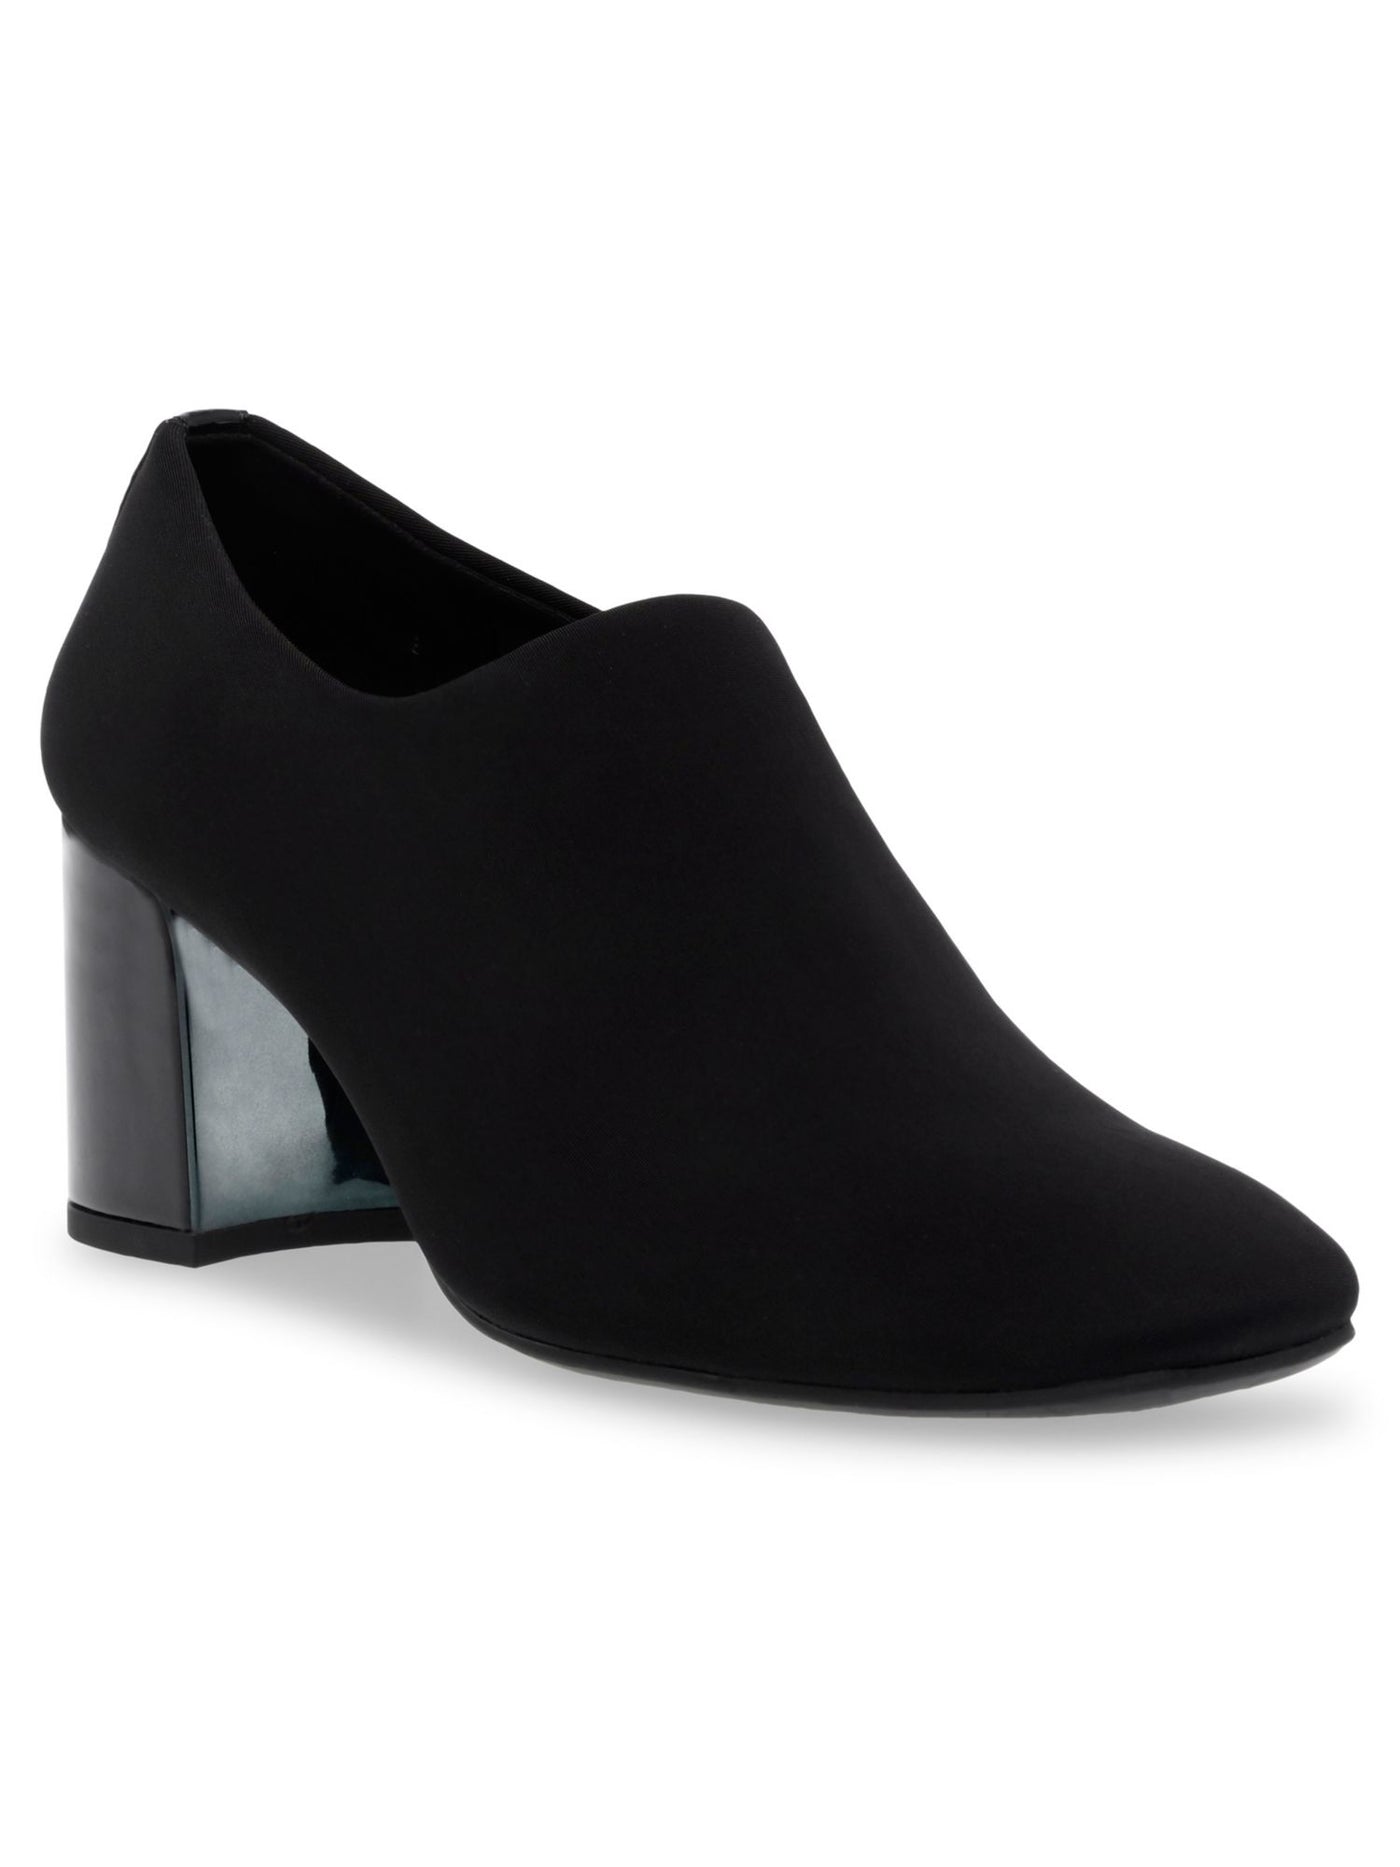 ANNE KLEIN Womens Black Stretch Trenton Square Toe Block Heel Slip On Pumps Shoes 6.5 M